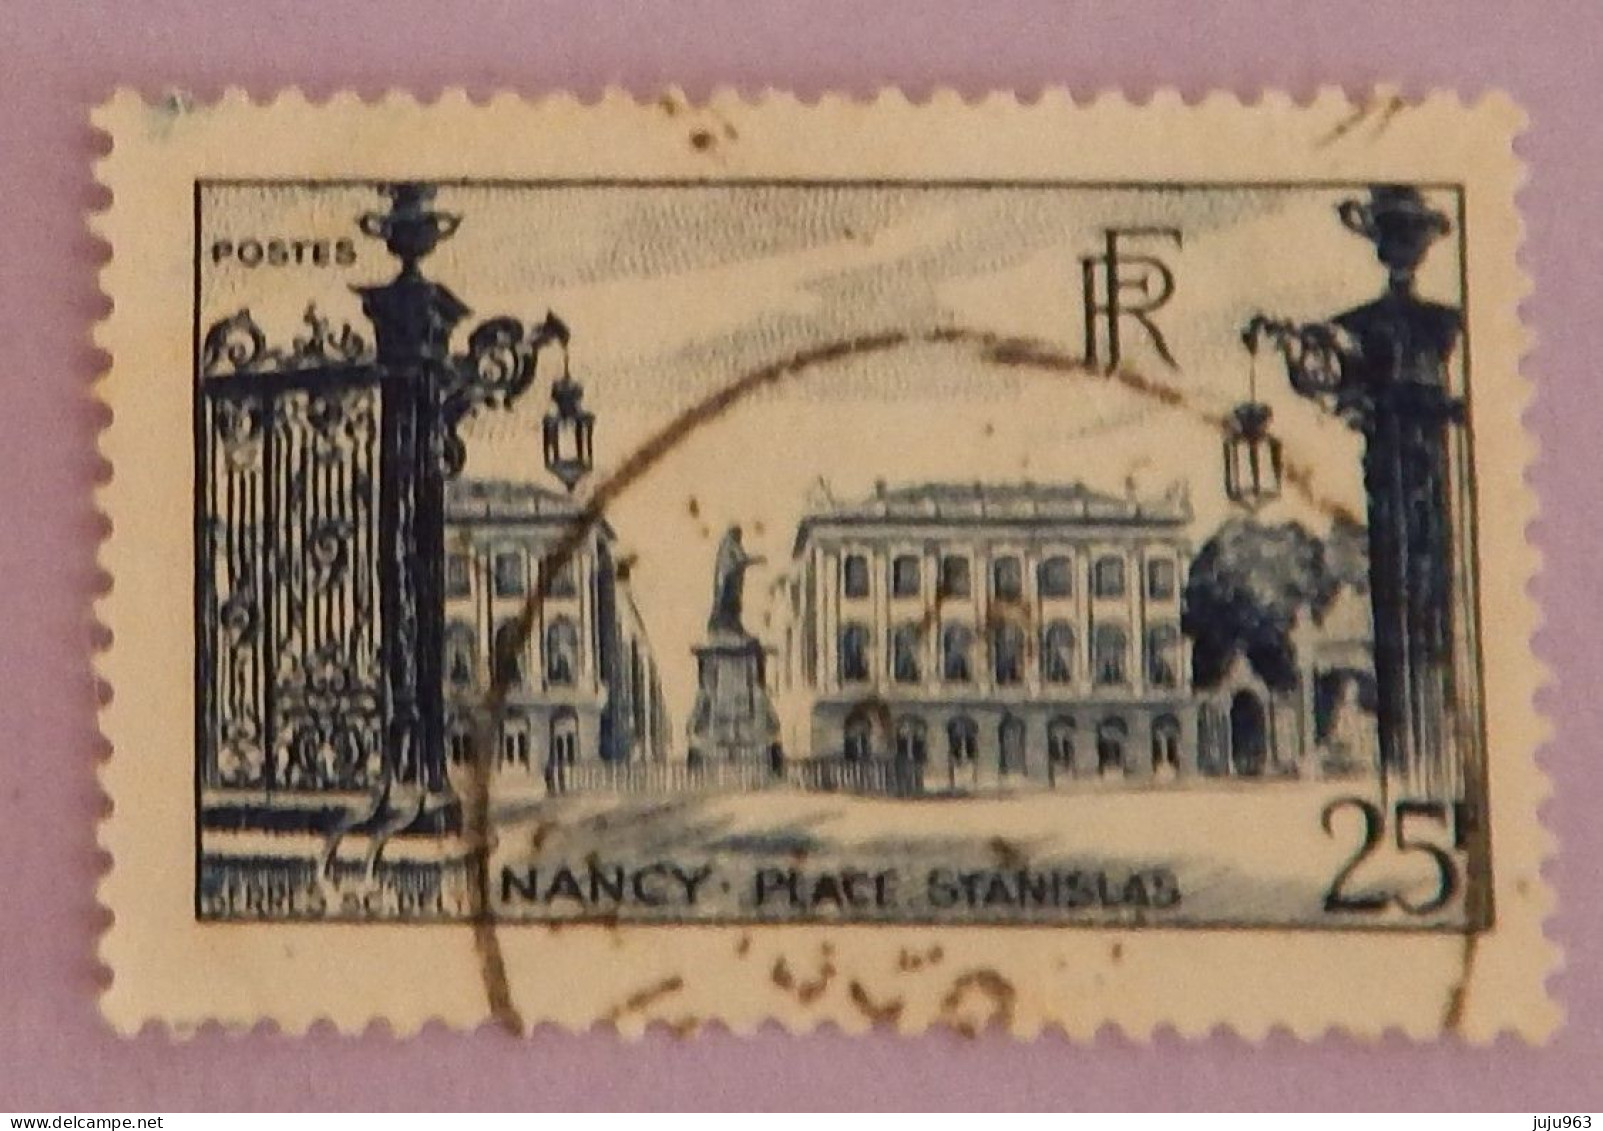 FRANCE YT 822 OBLITÉRÉ  "NANCY"  ANNÉE 1948 - Used Stamps